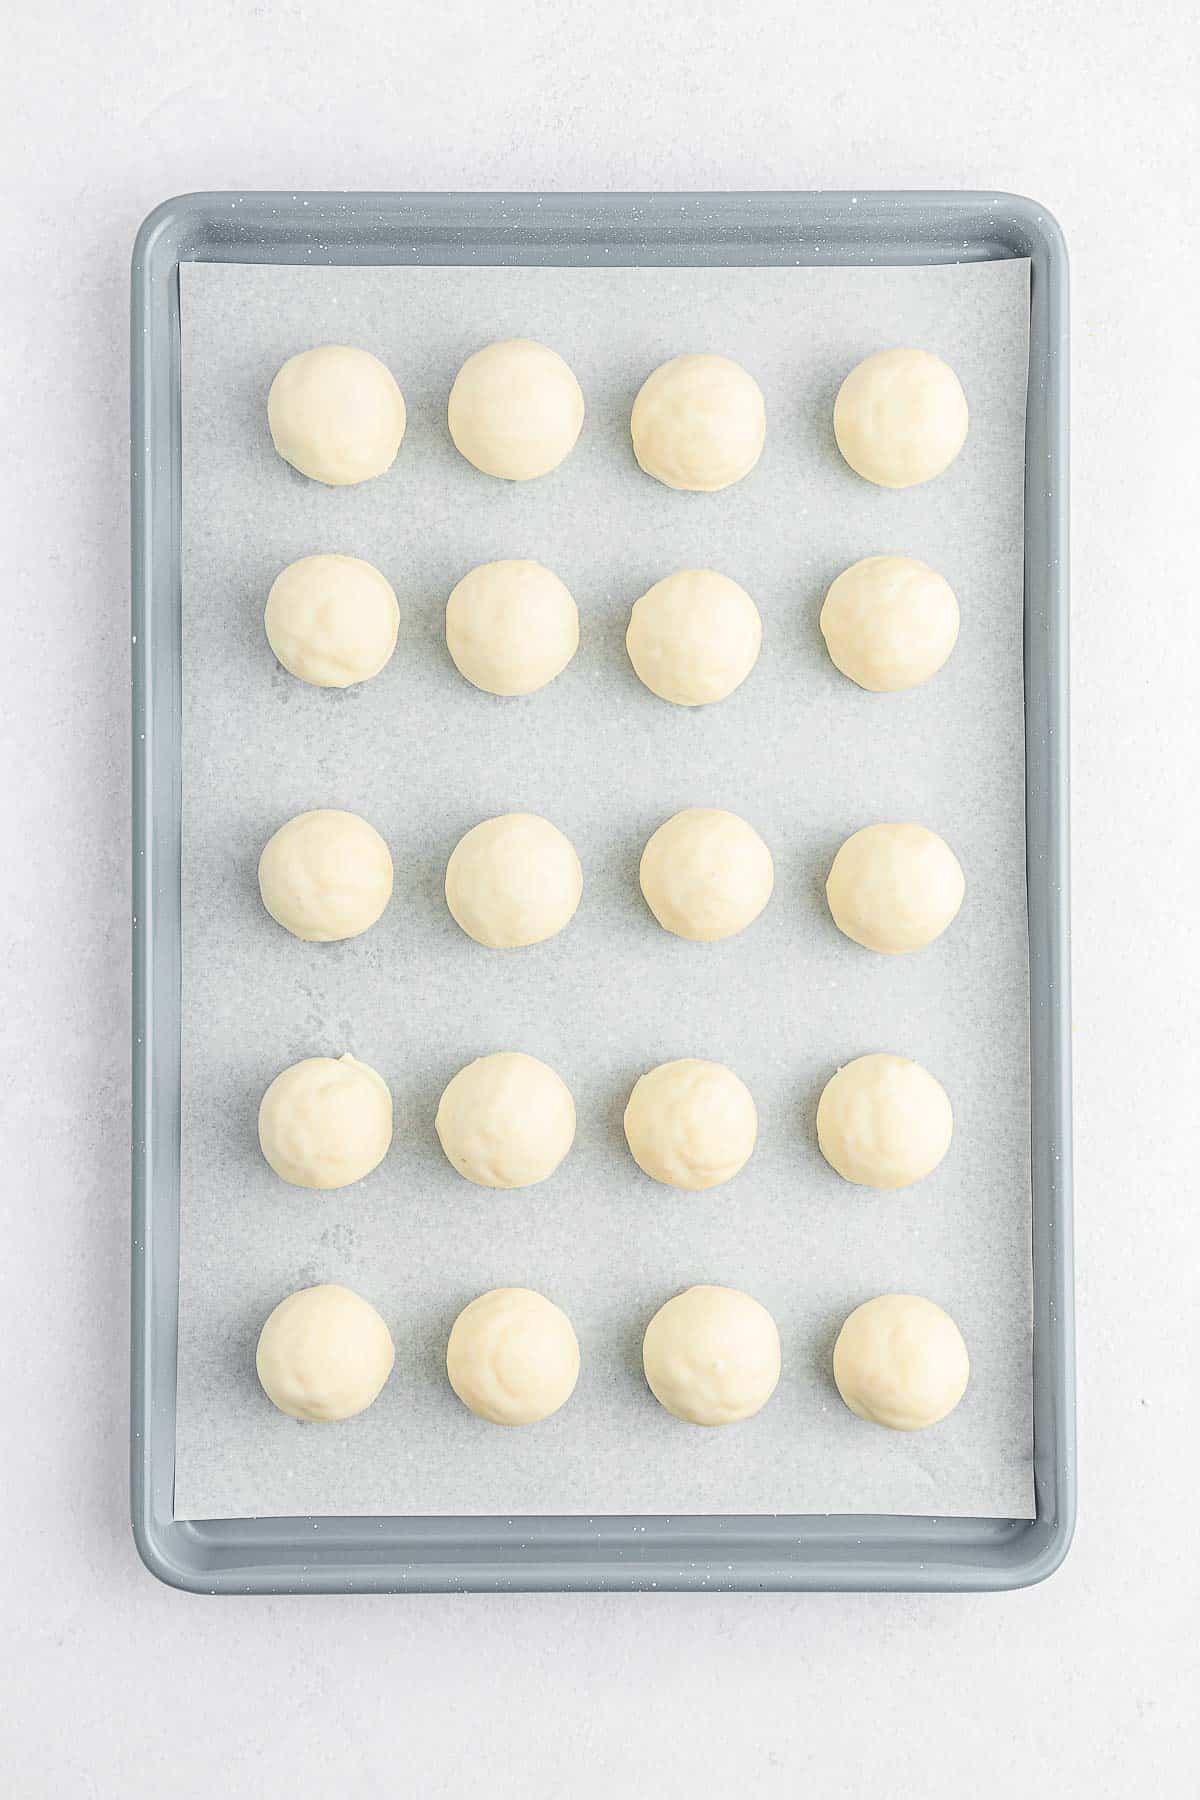 Lemon cake balls on a baking sheet.